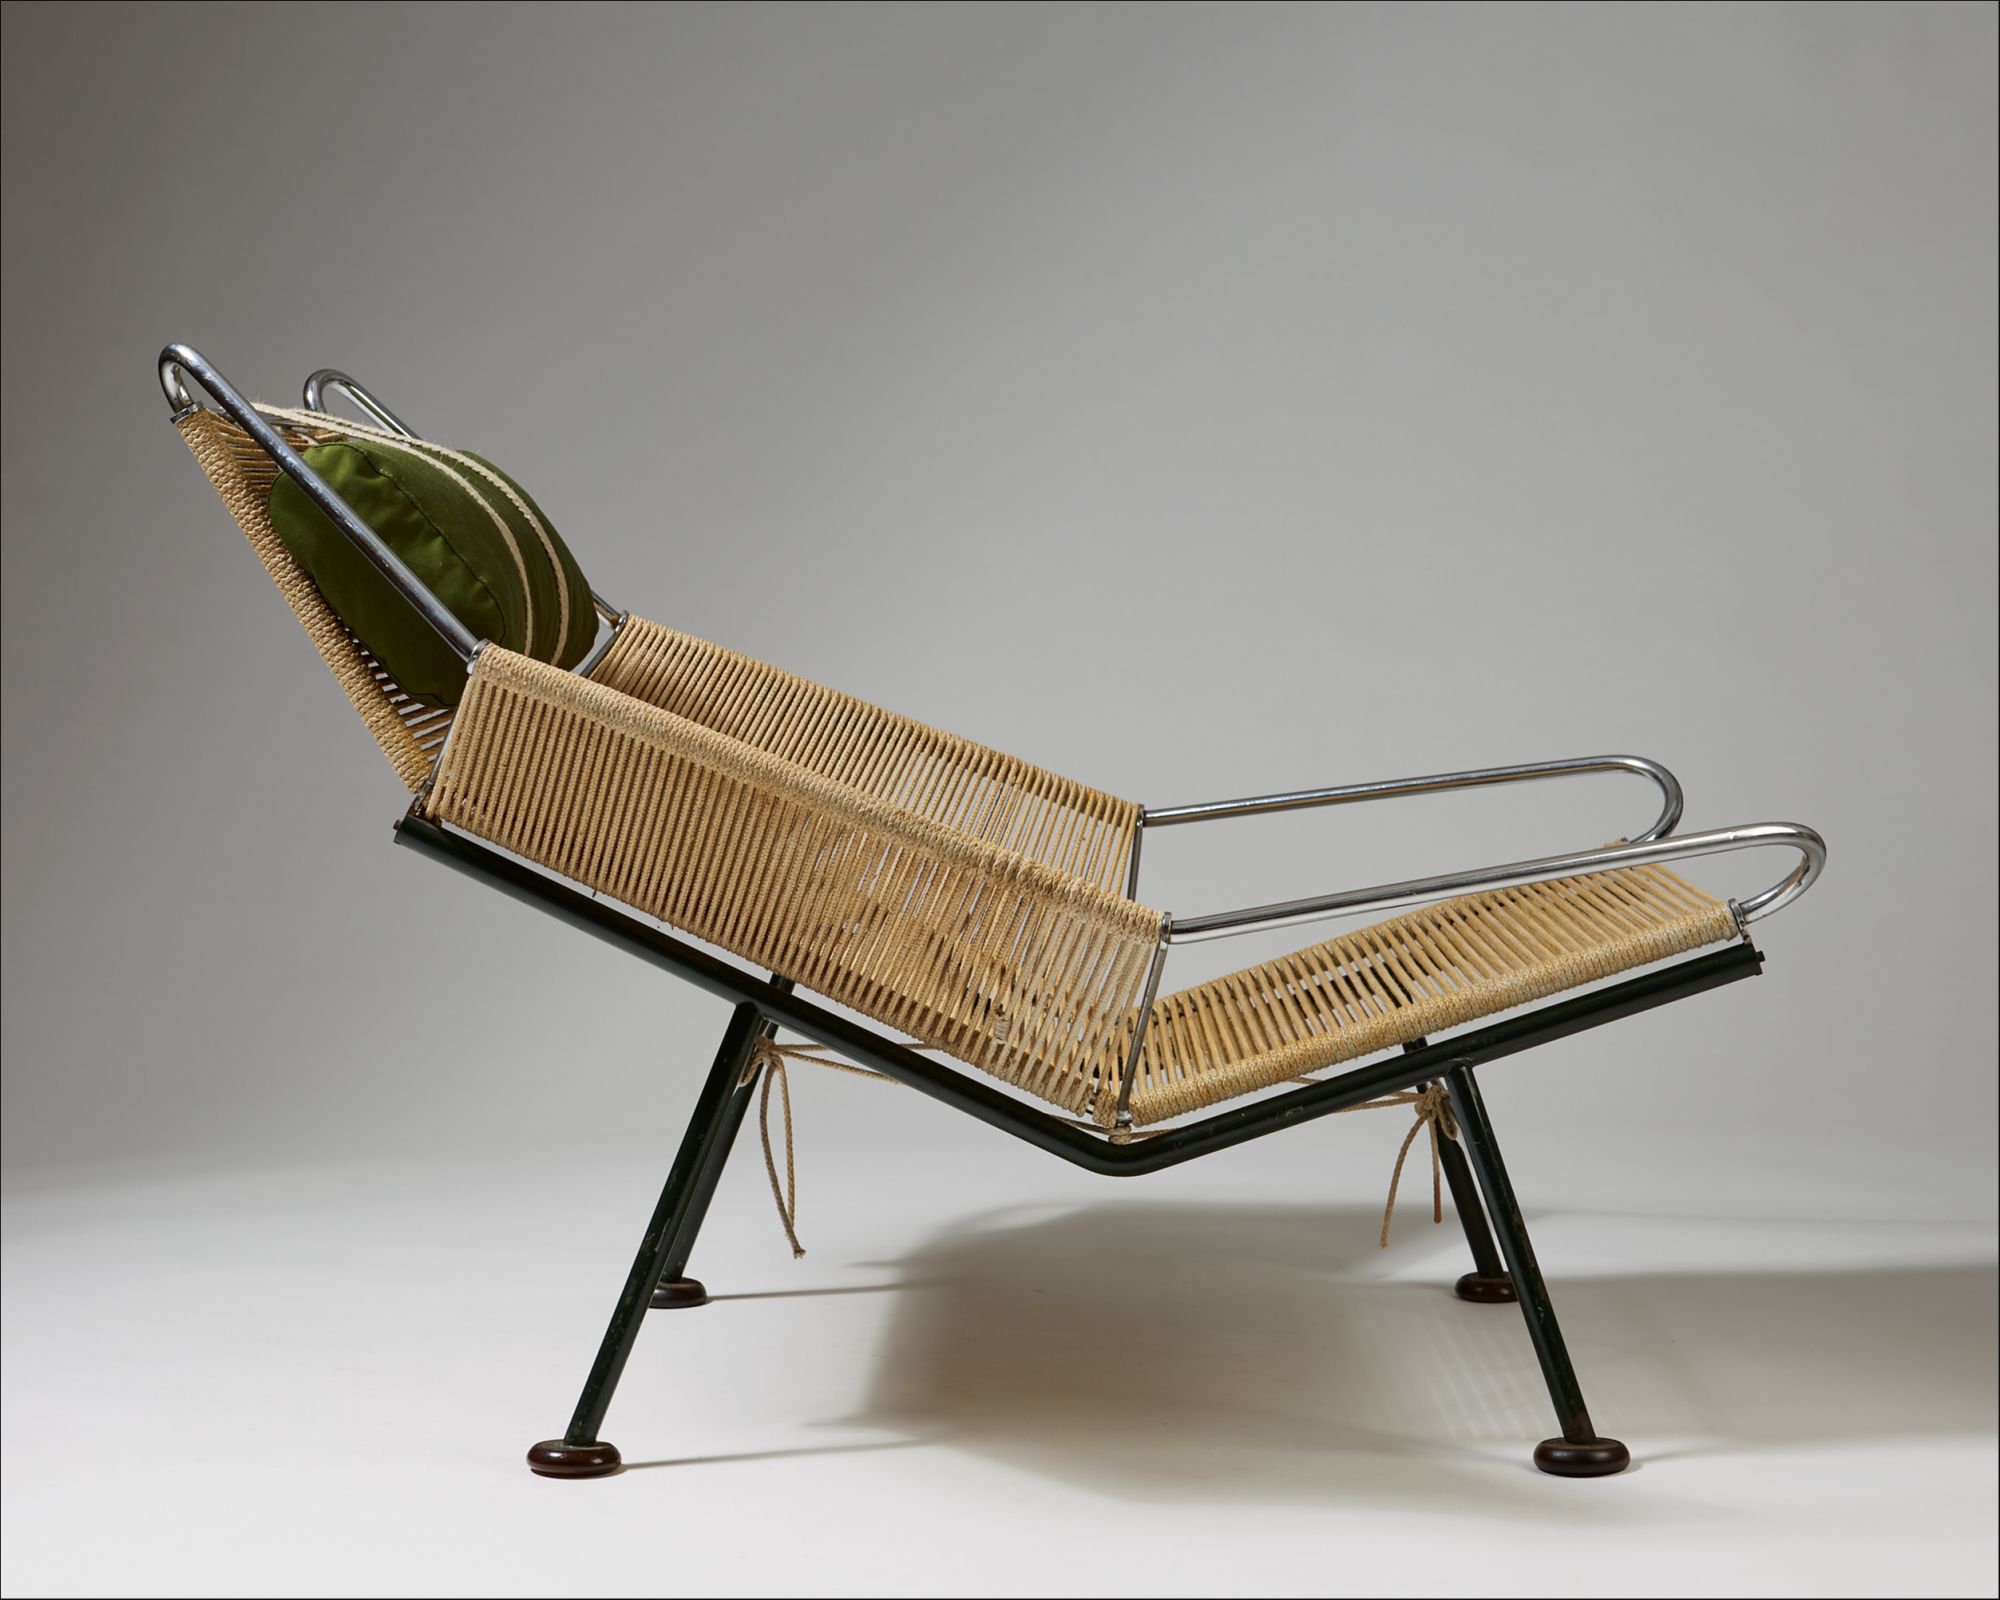 The Flag Halyard Chair Designed By Hans Wegner For Getama